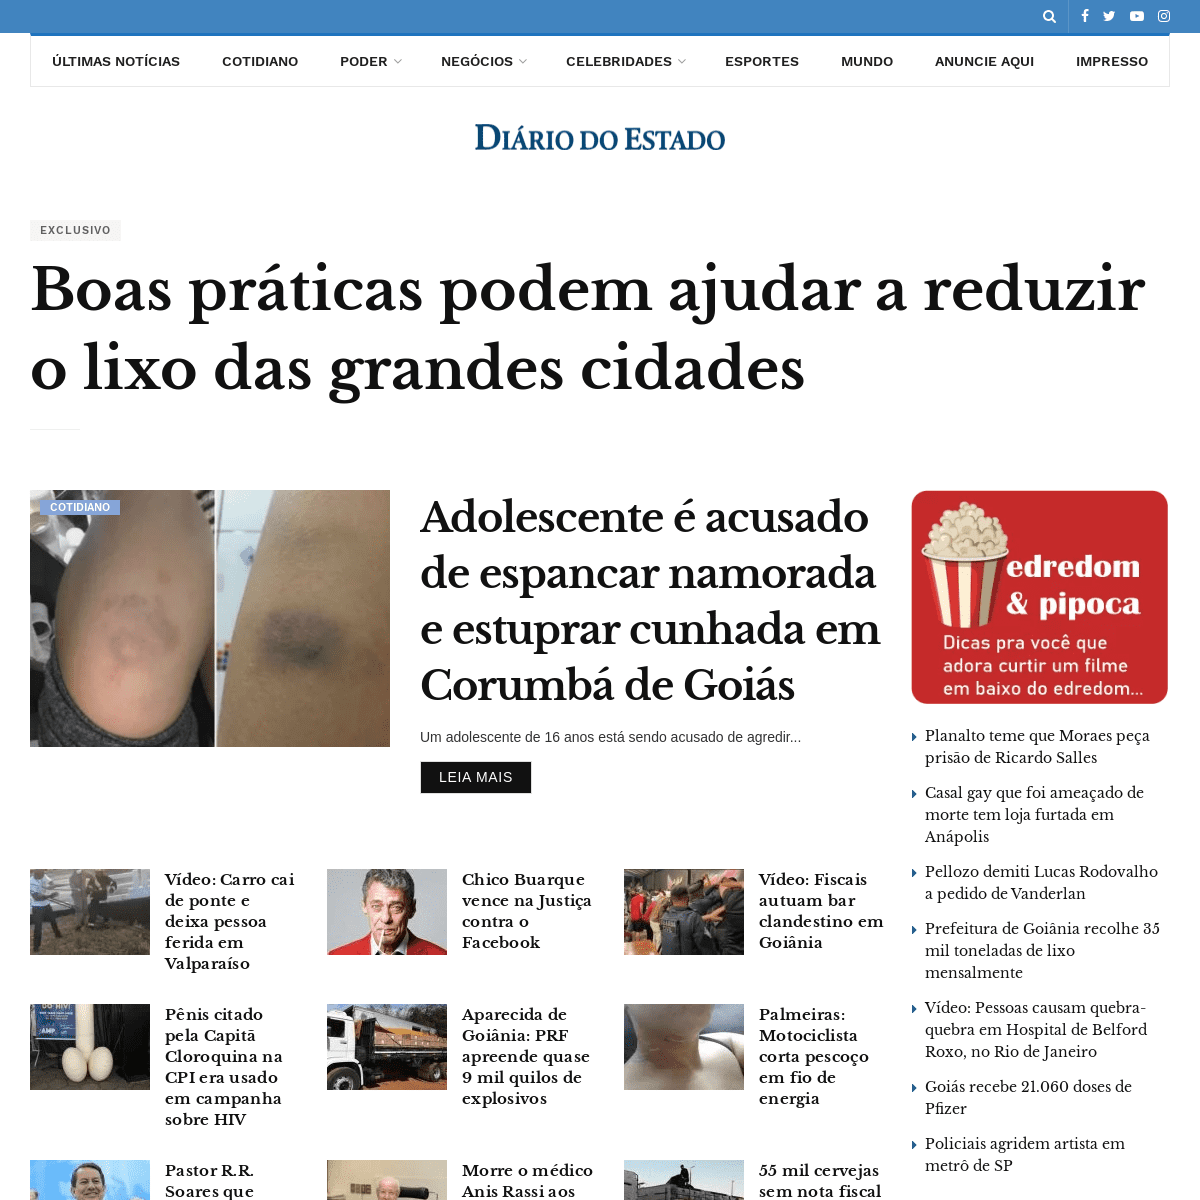 A complete backup of https://diariodoestadogo.com.br